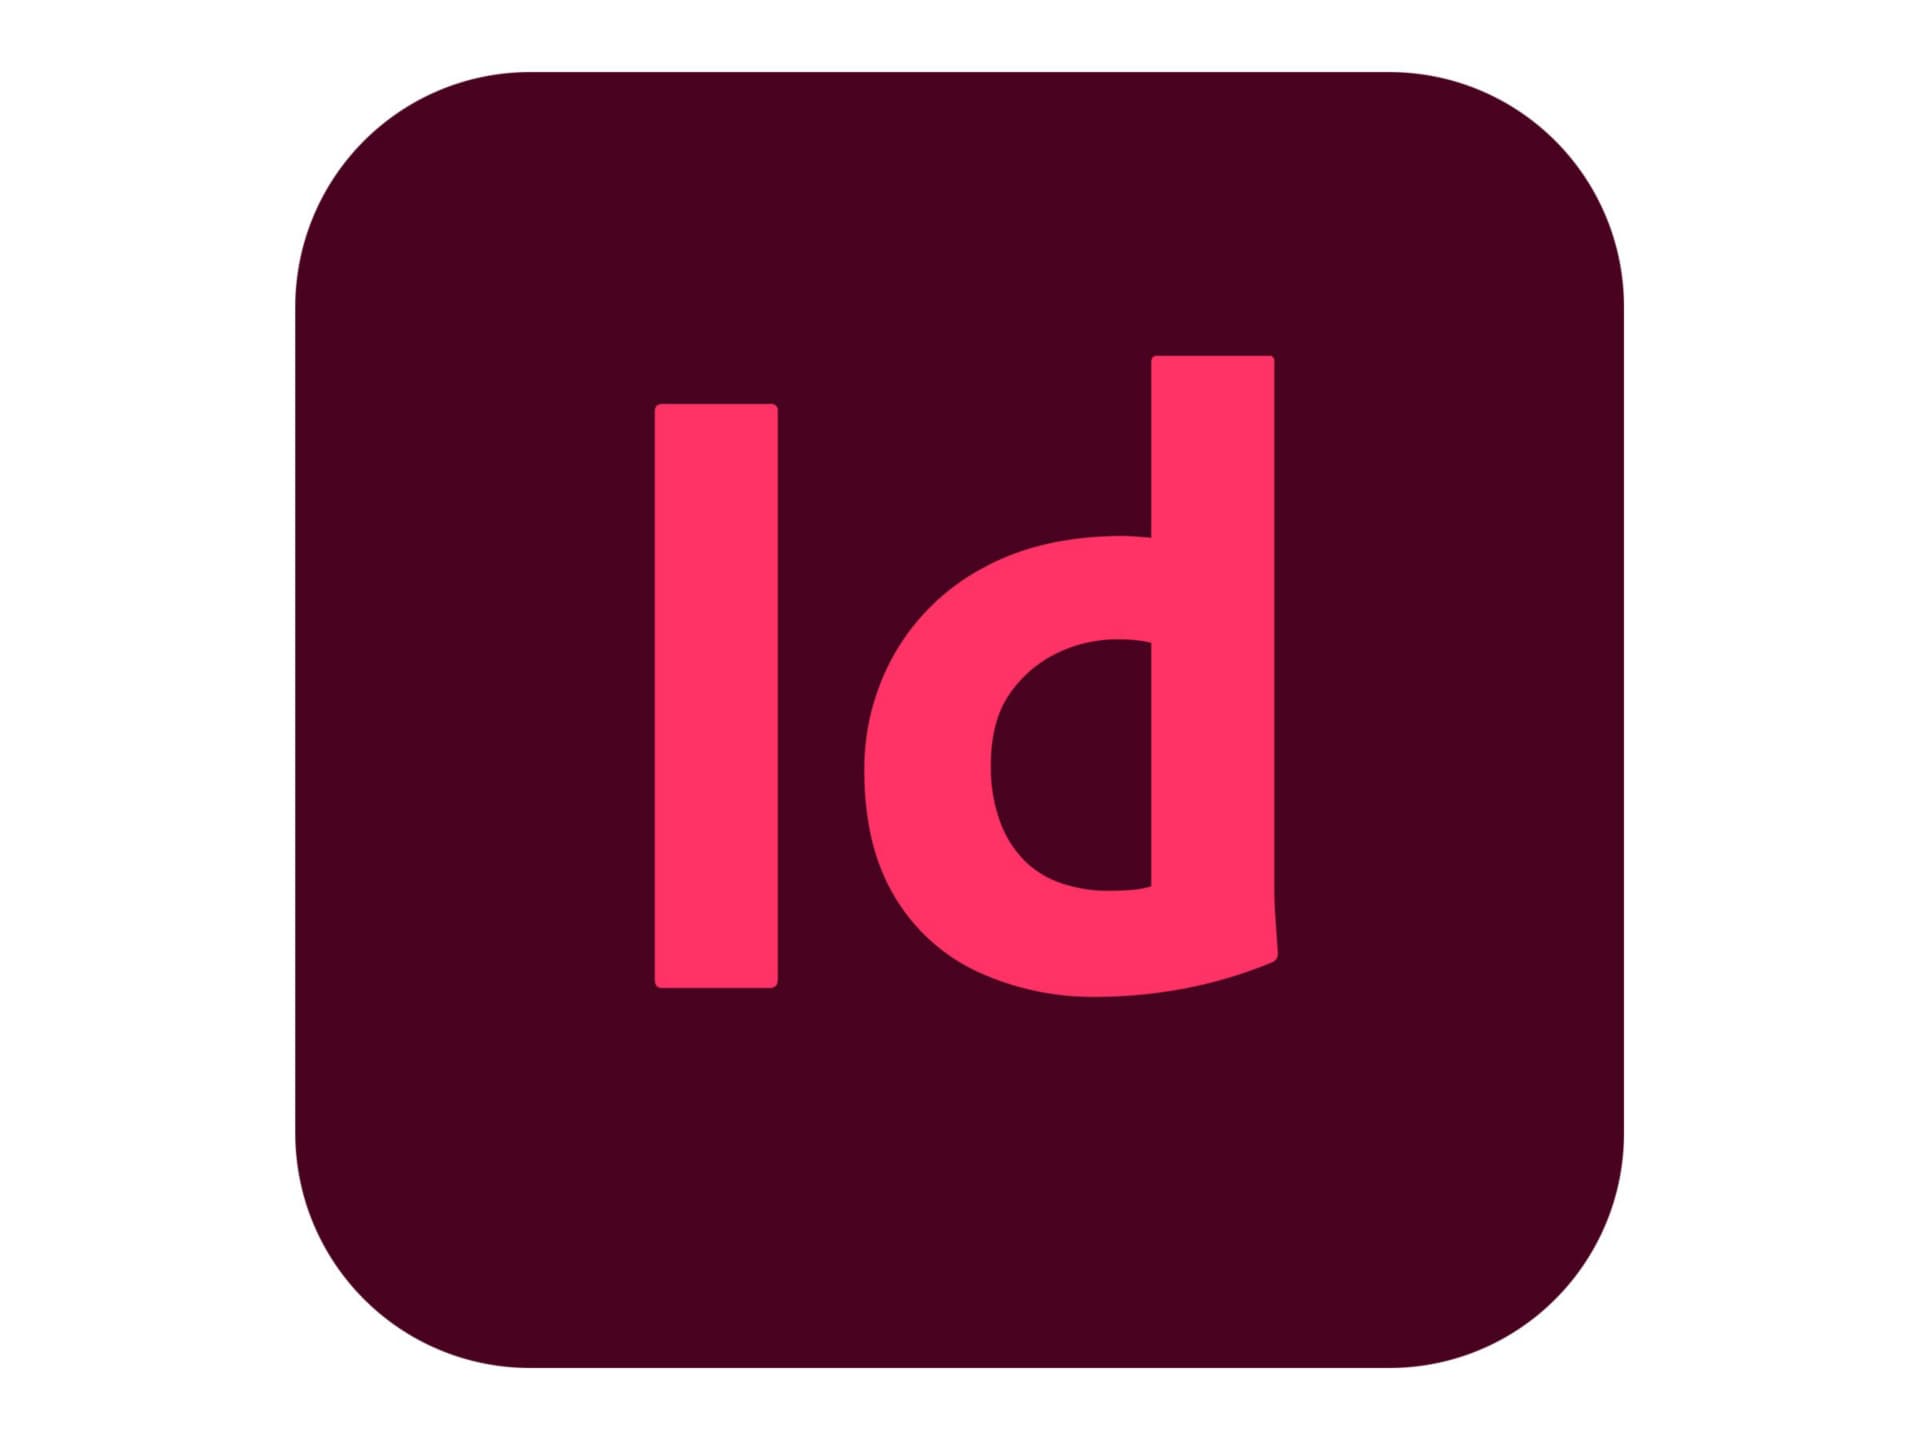 Adobe InDesign CC for Enterprise - Subscription New (11 months) - 1 named user